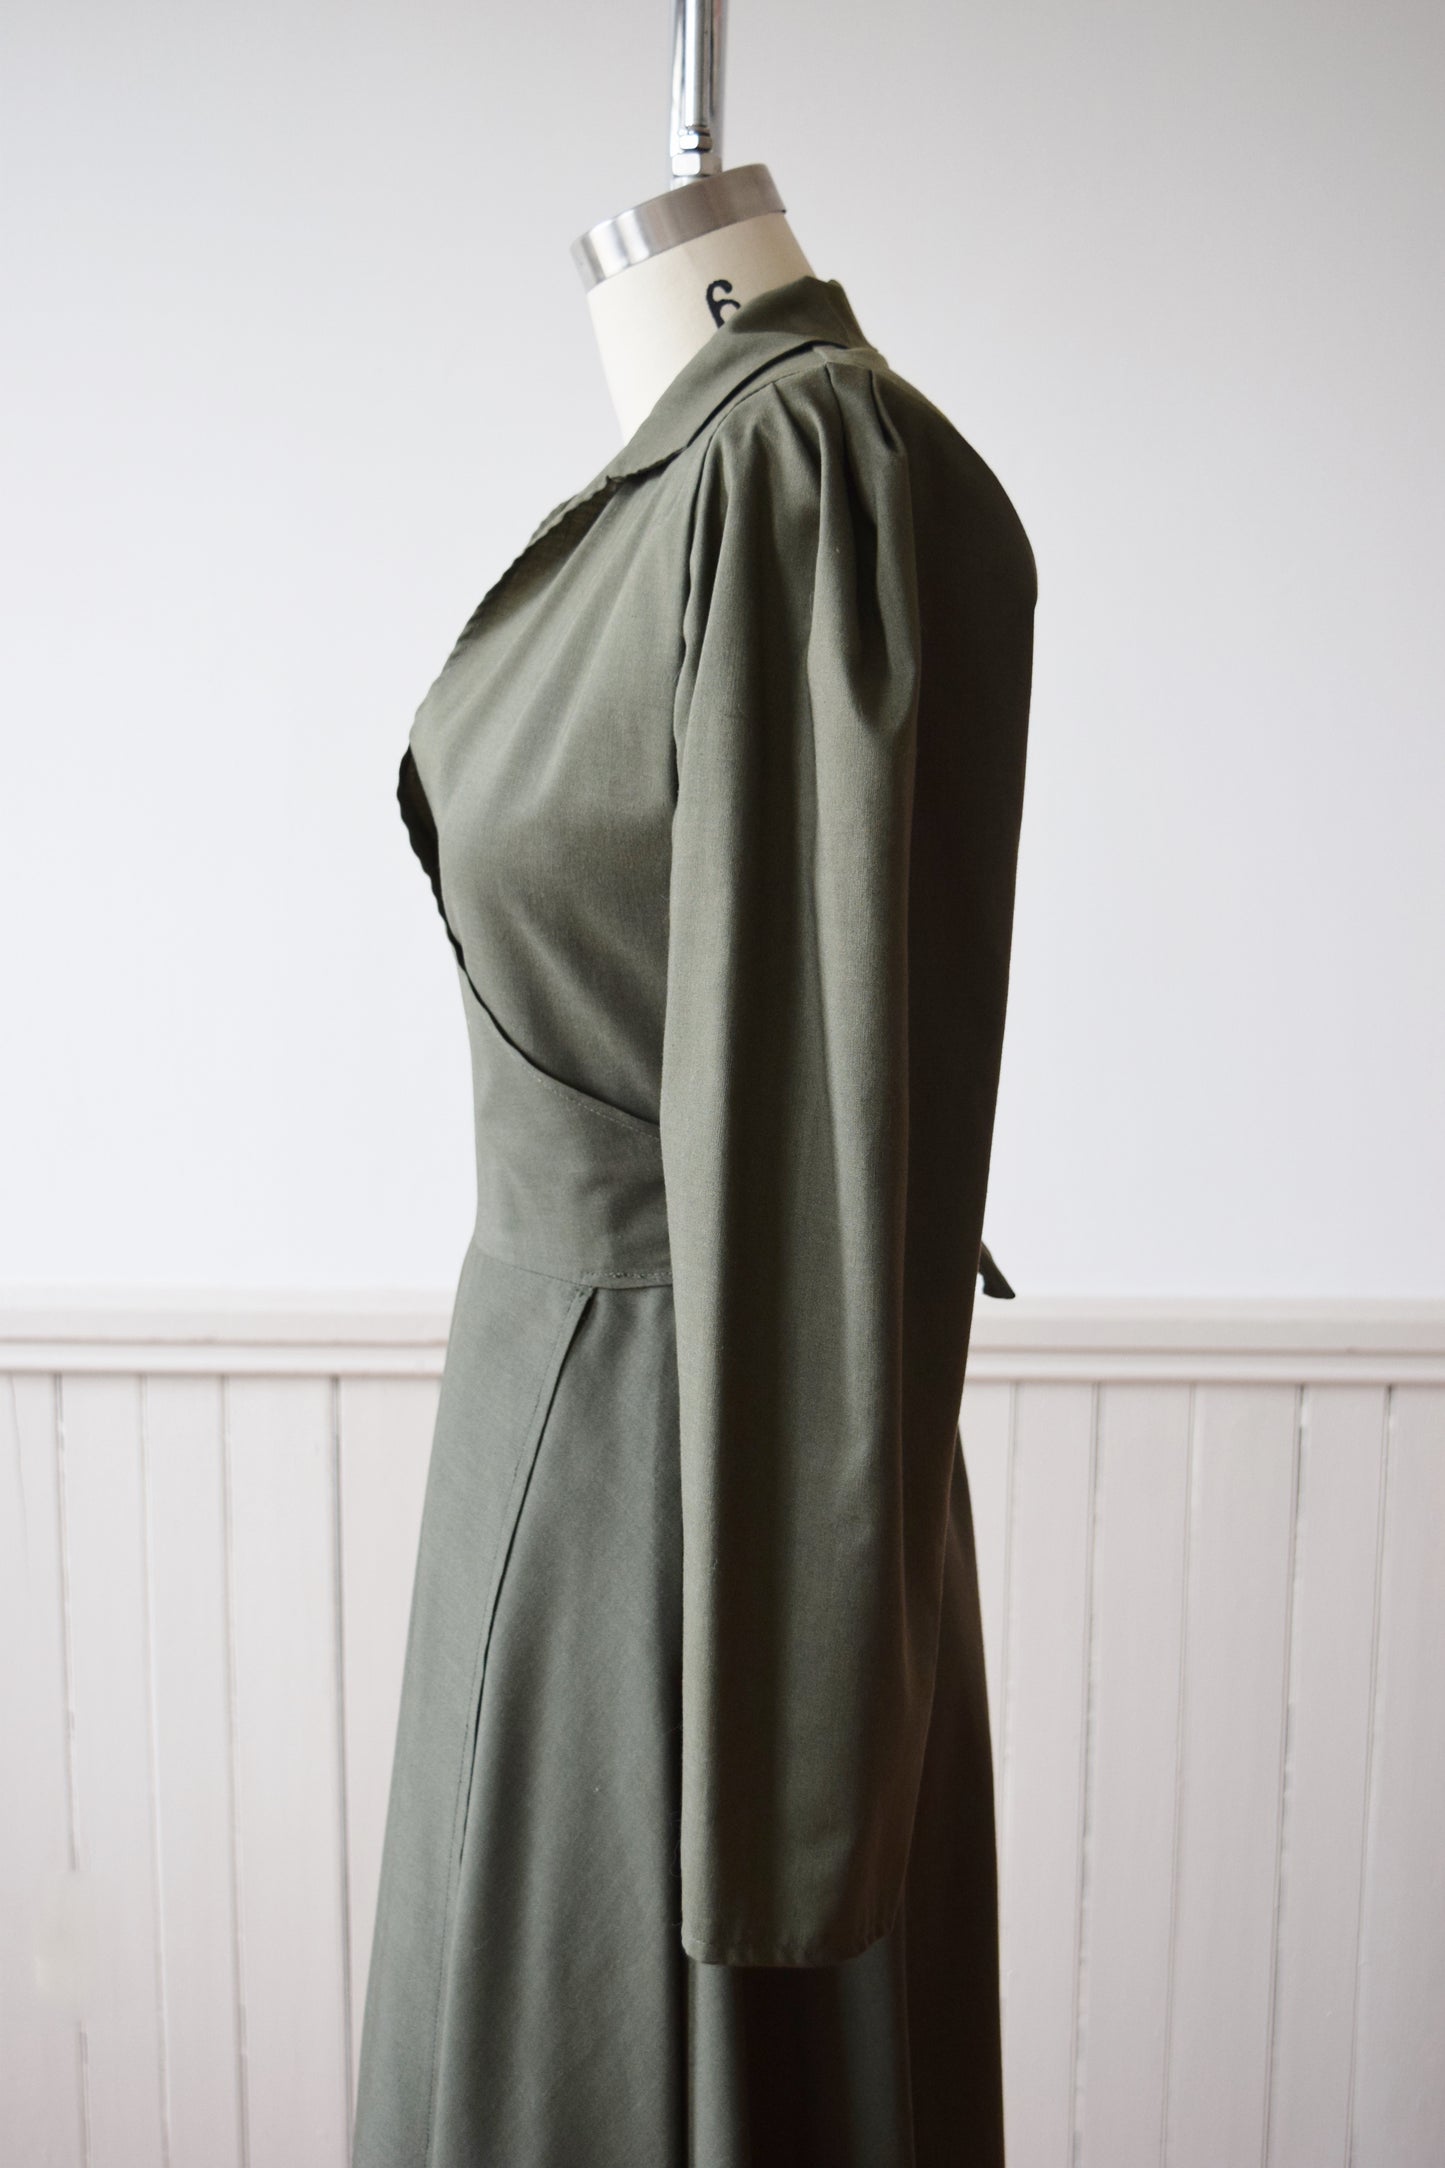 Norma Kamali Olive Green Wrap Dress | SP